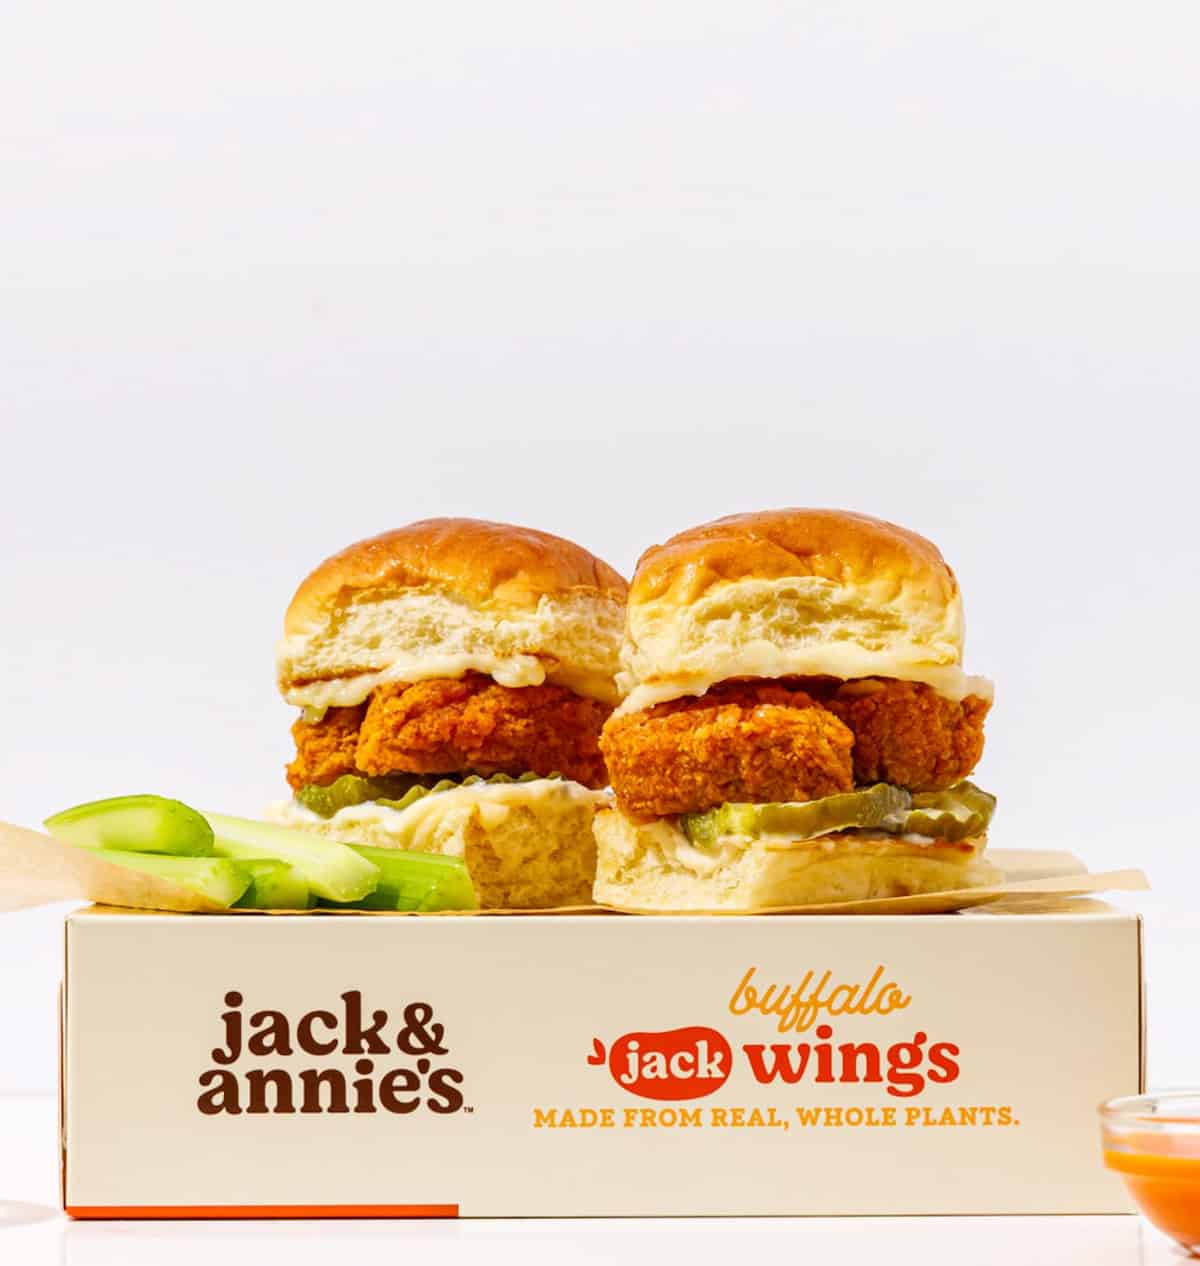 Jack and Annie's brand jackfruit-based vegan chicken nuggets on sliders.